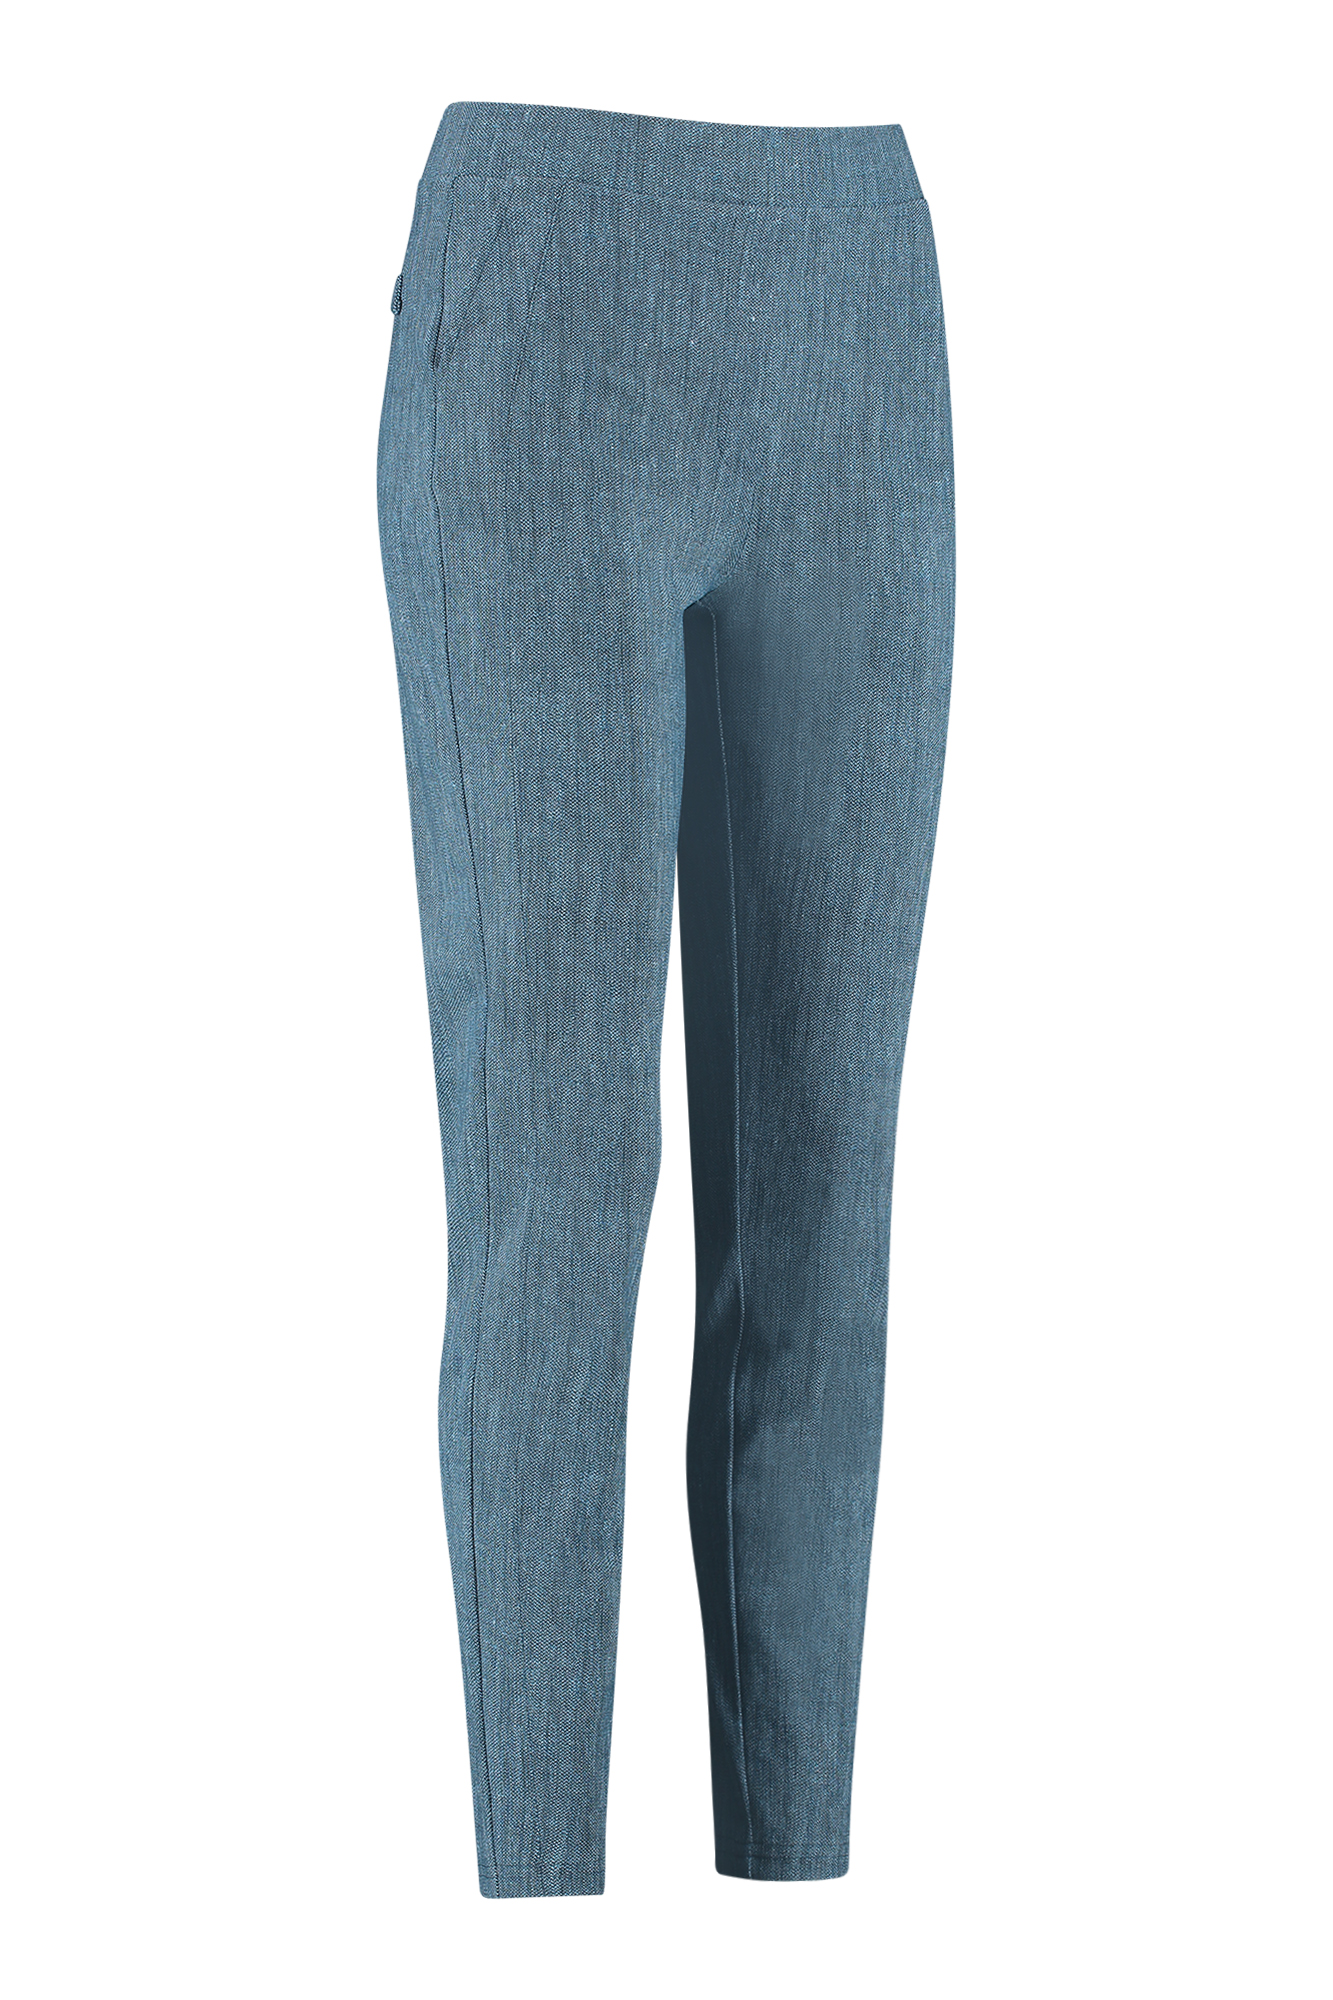 Studio Anneloes Blair Bonded Jeans Trousers Denim Blue